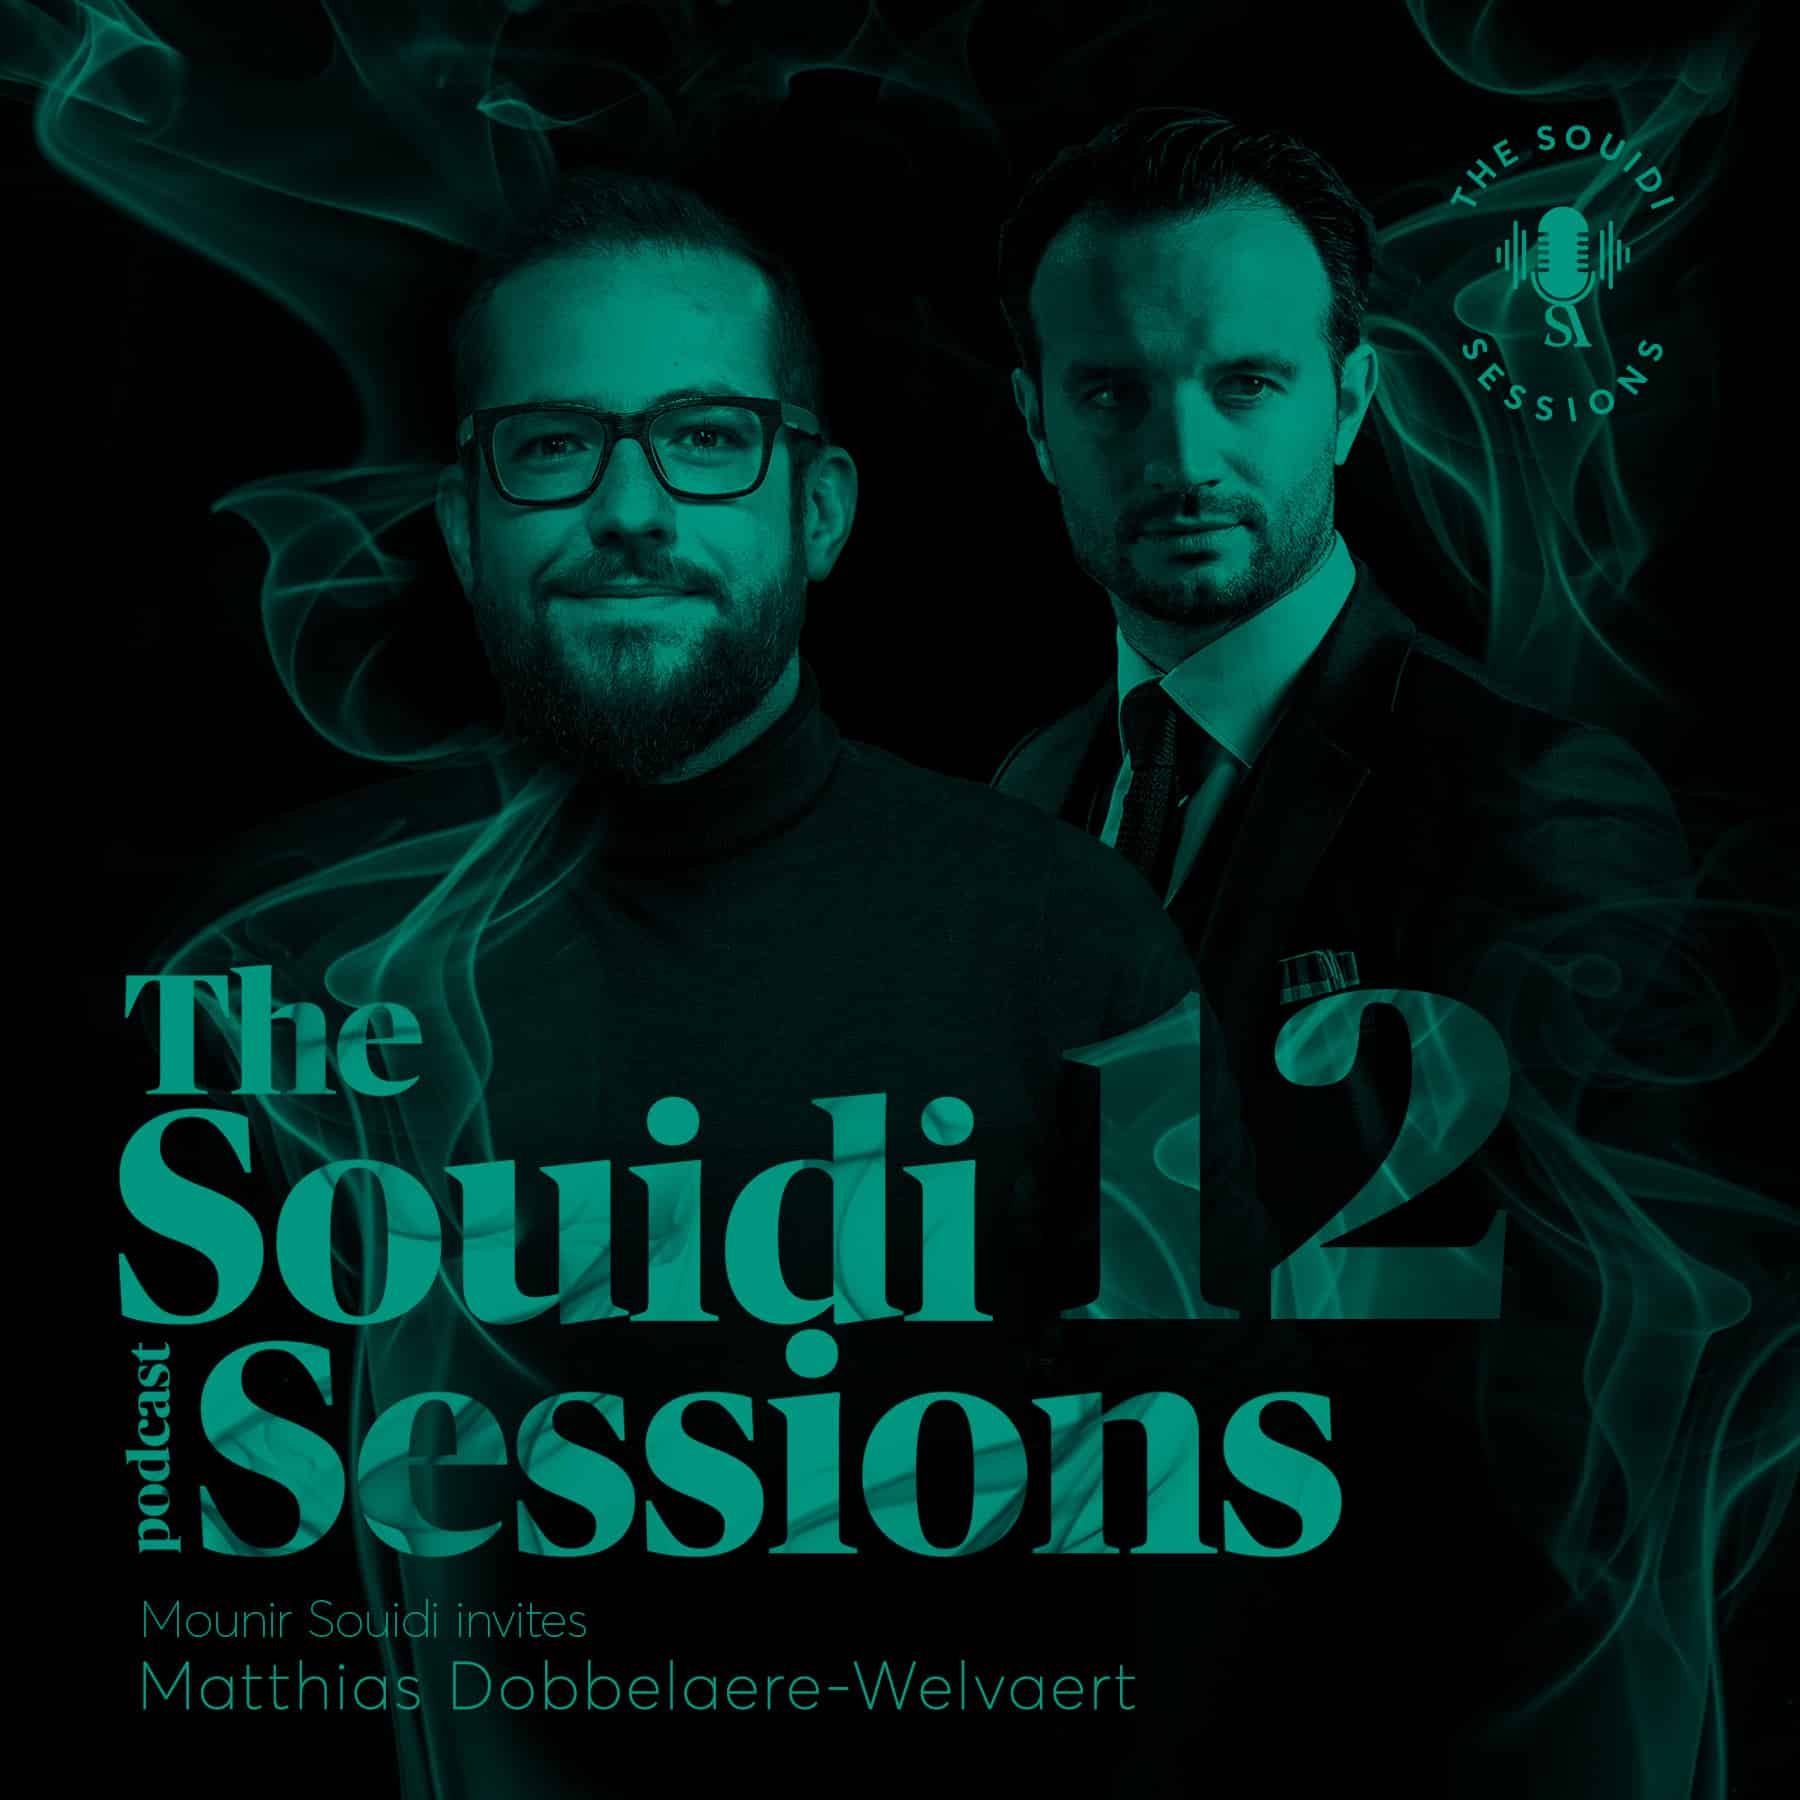 Souidi sessions met Matthias Dobbelaere-Welvaert